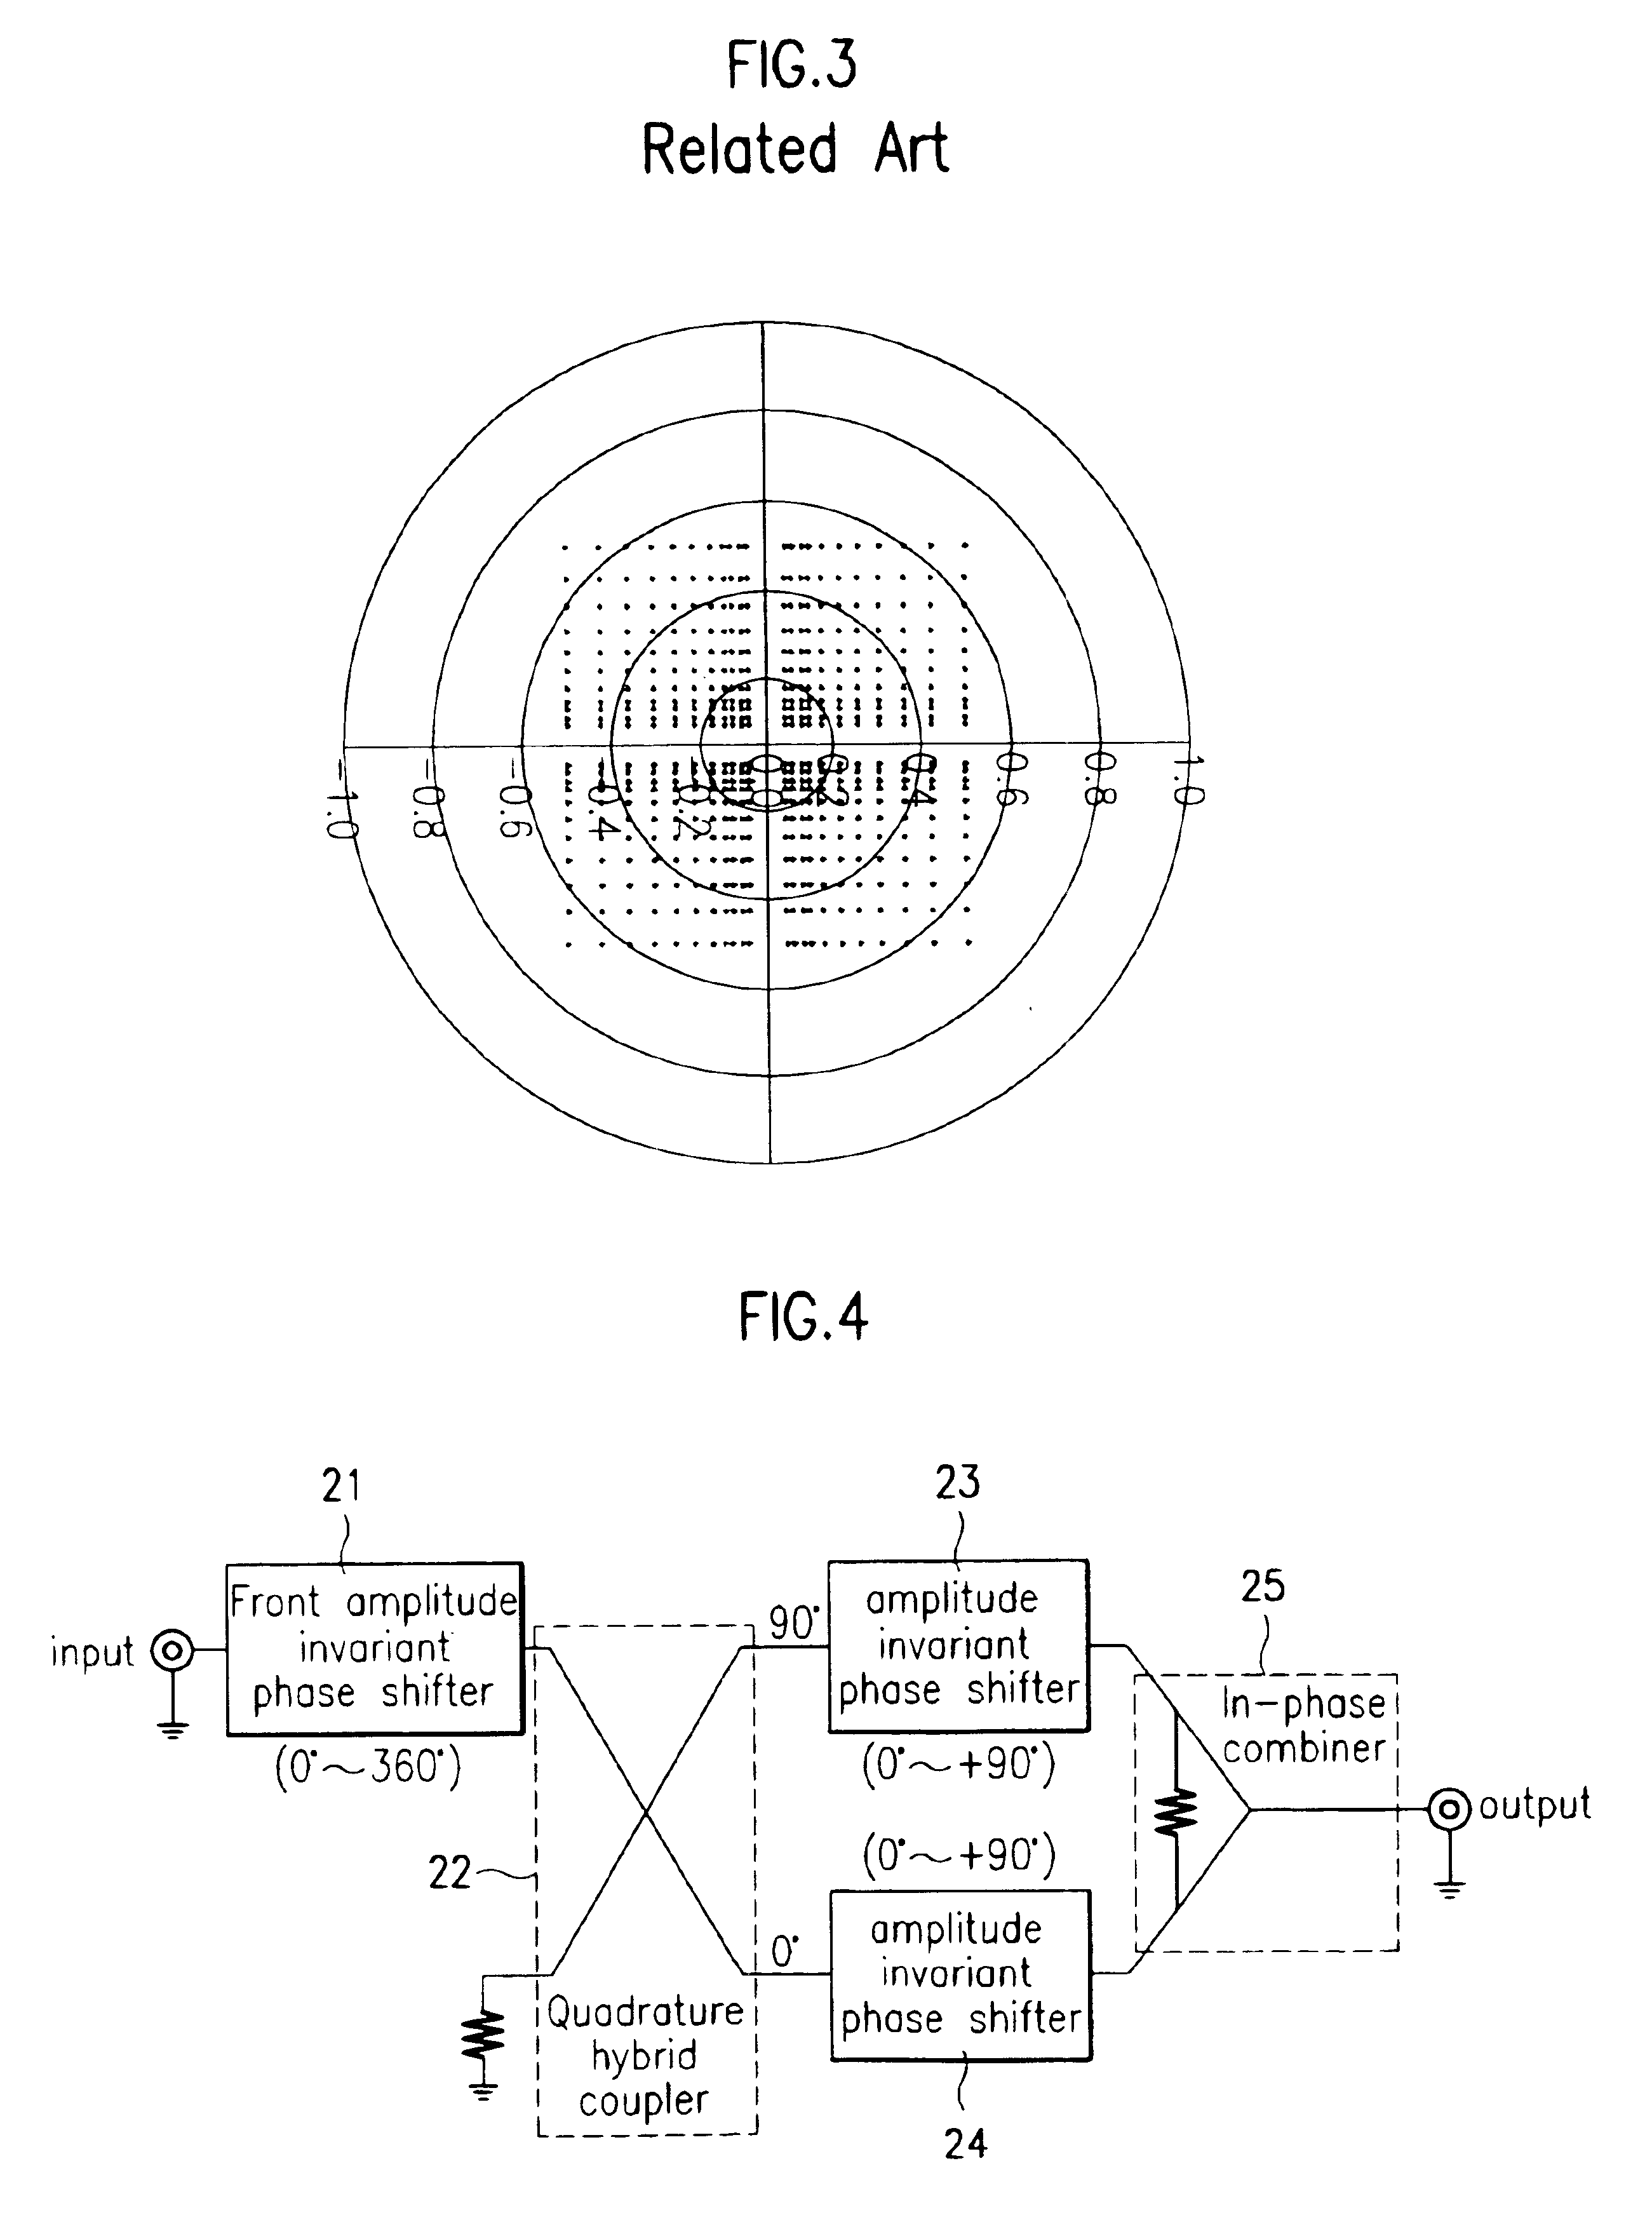 Vector modulator using amplitude invariant phase shifter